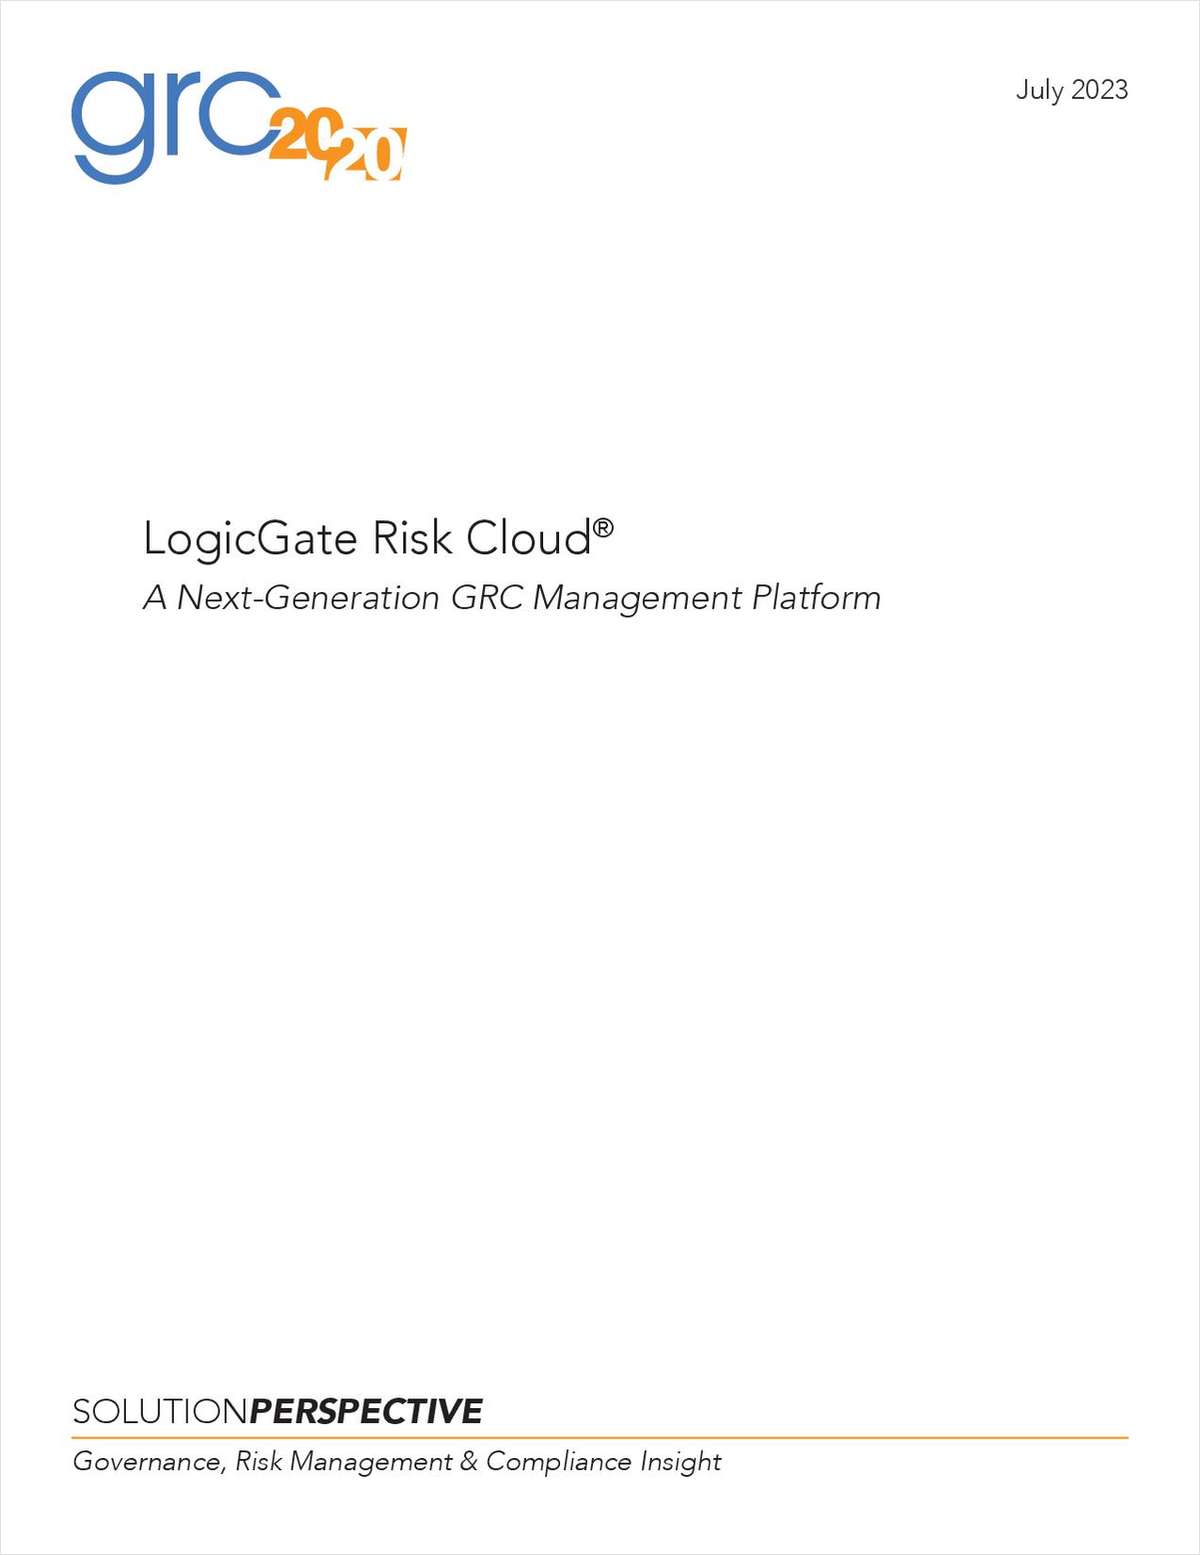 Risk Cloud by LogicGate: A Next-Generation, Integrated, GRC Management Platform